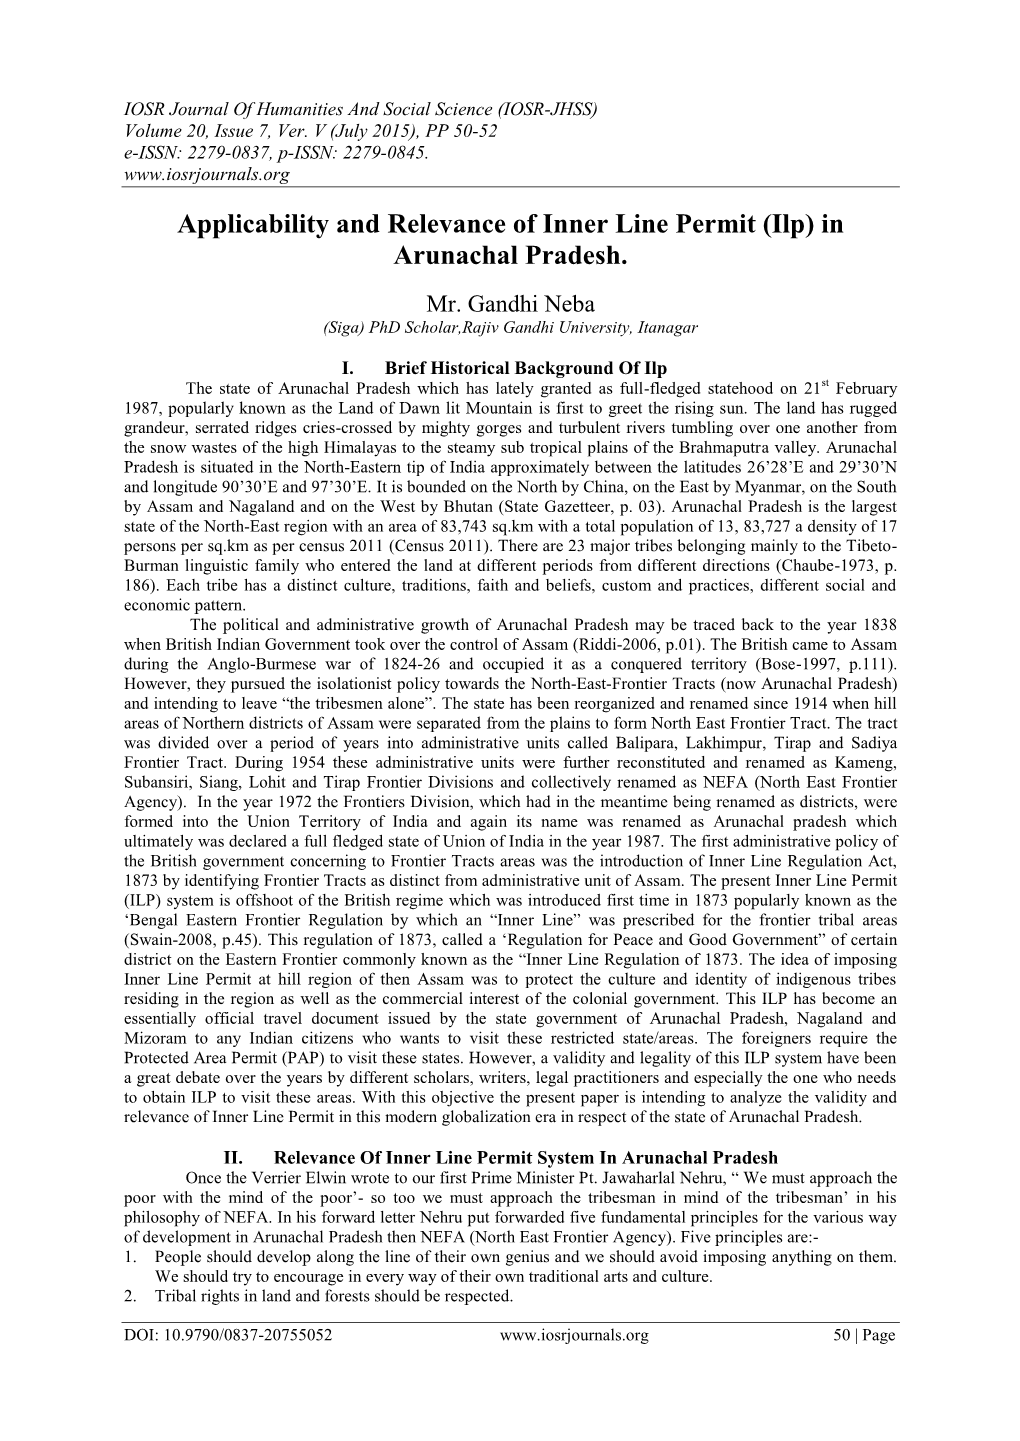 Applicability and Relevance of Inner Line Permit (Ilp) in Arunachal Pradesh